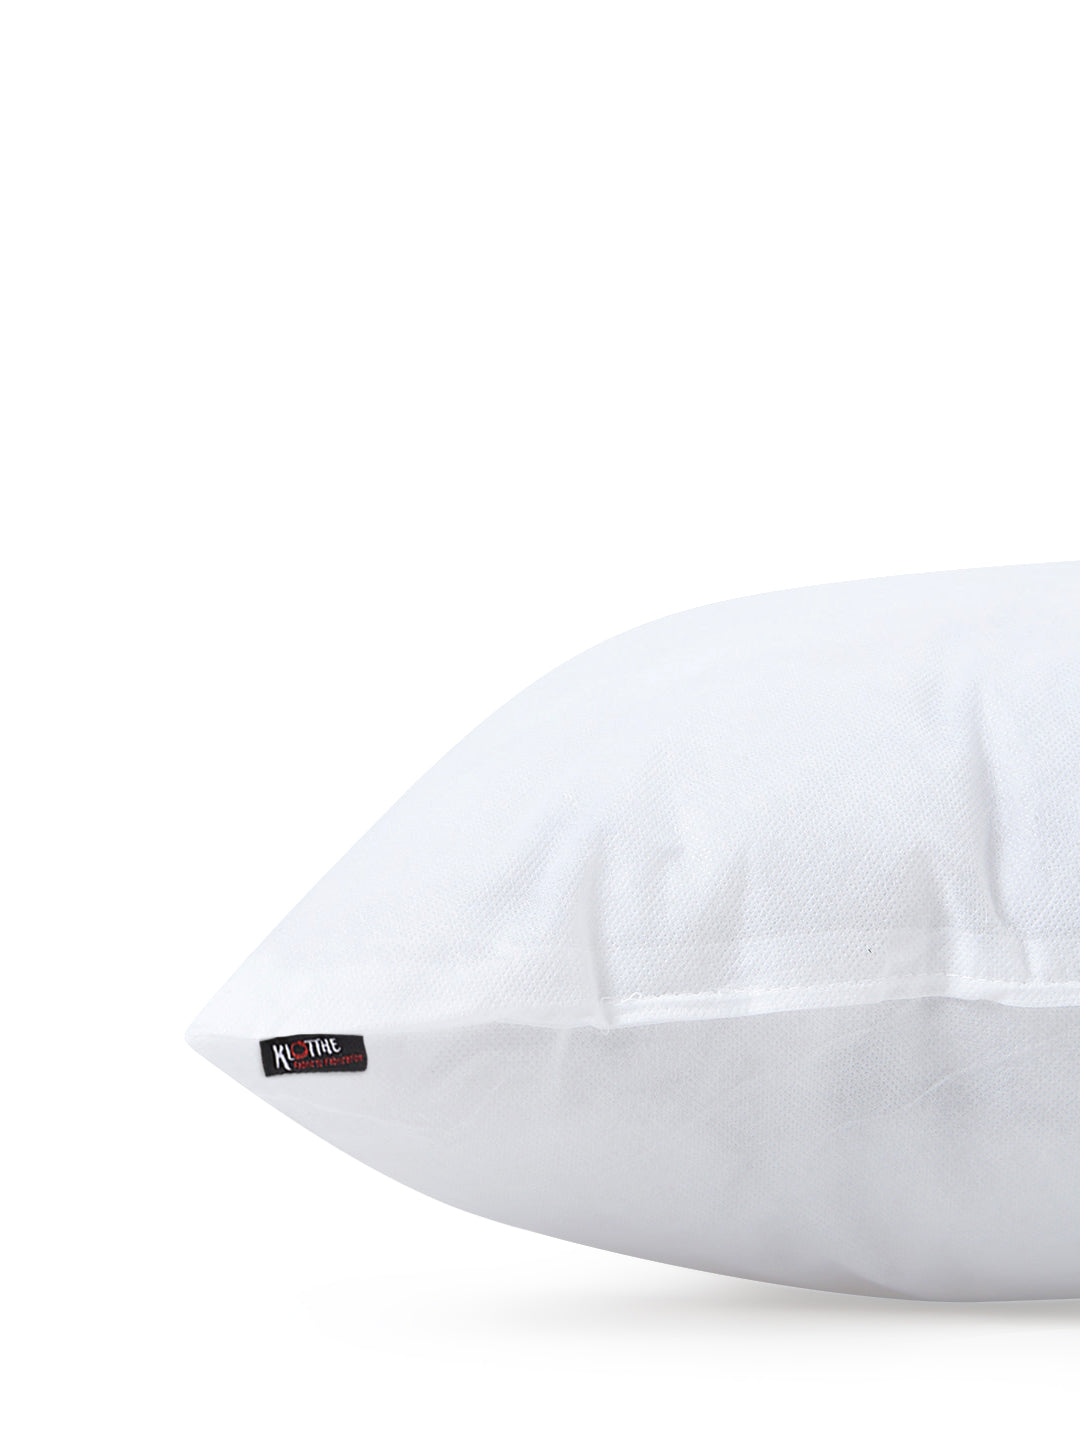 KLOTTHE Set of Five White Poly Cotton Microfibre Cushion Fillers (50X50cm)